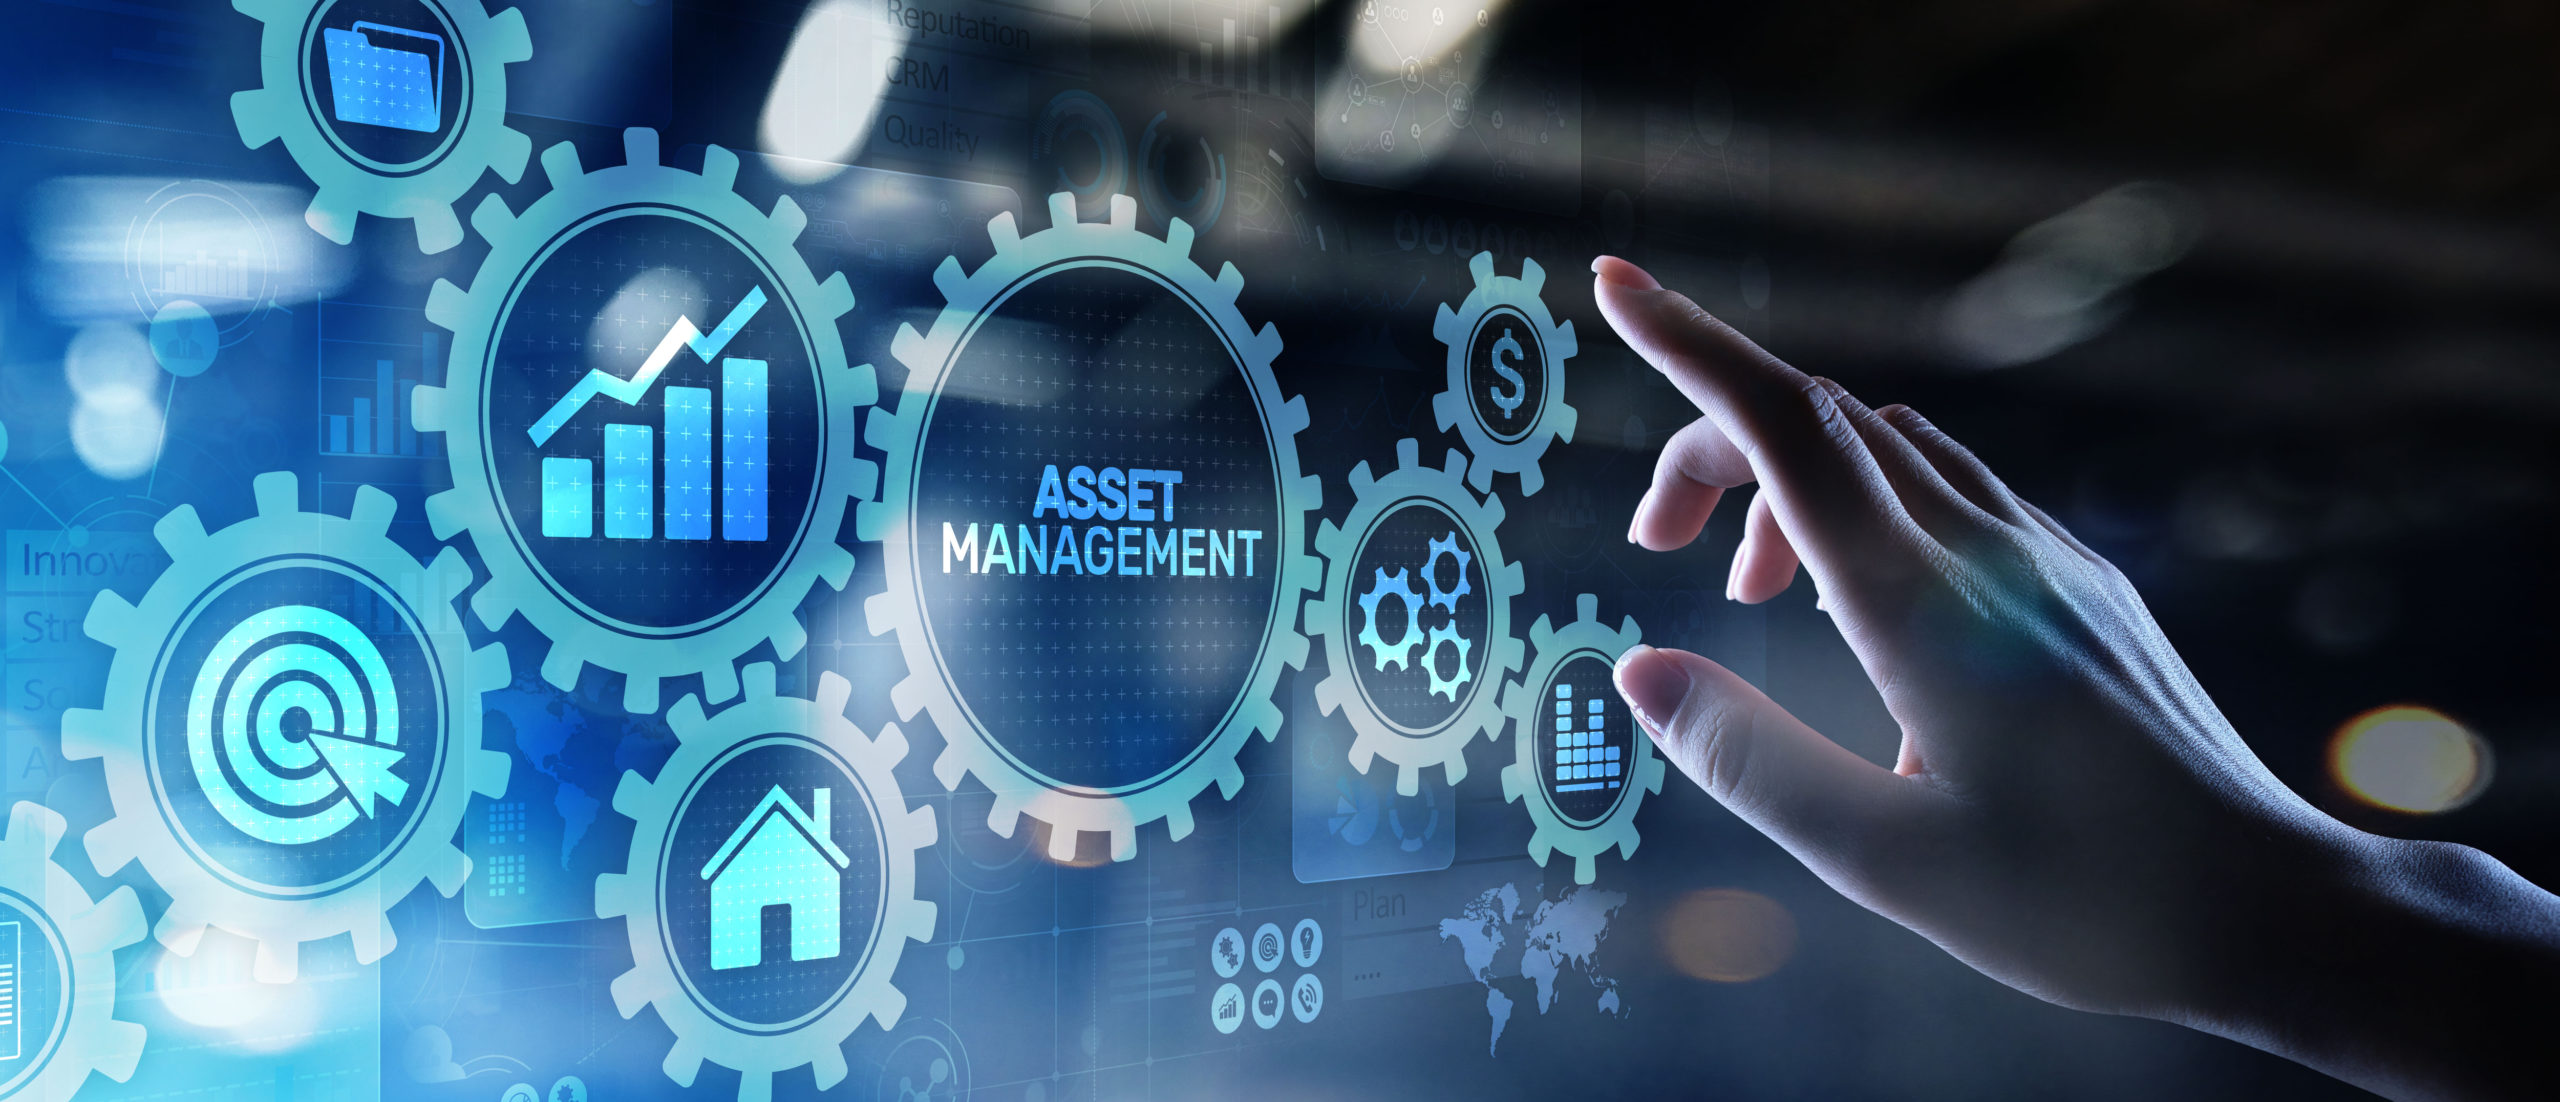 Asset Management Sunset Hills, MO | Financial Planners | Investment Advisors | Wealth Management